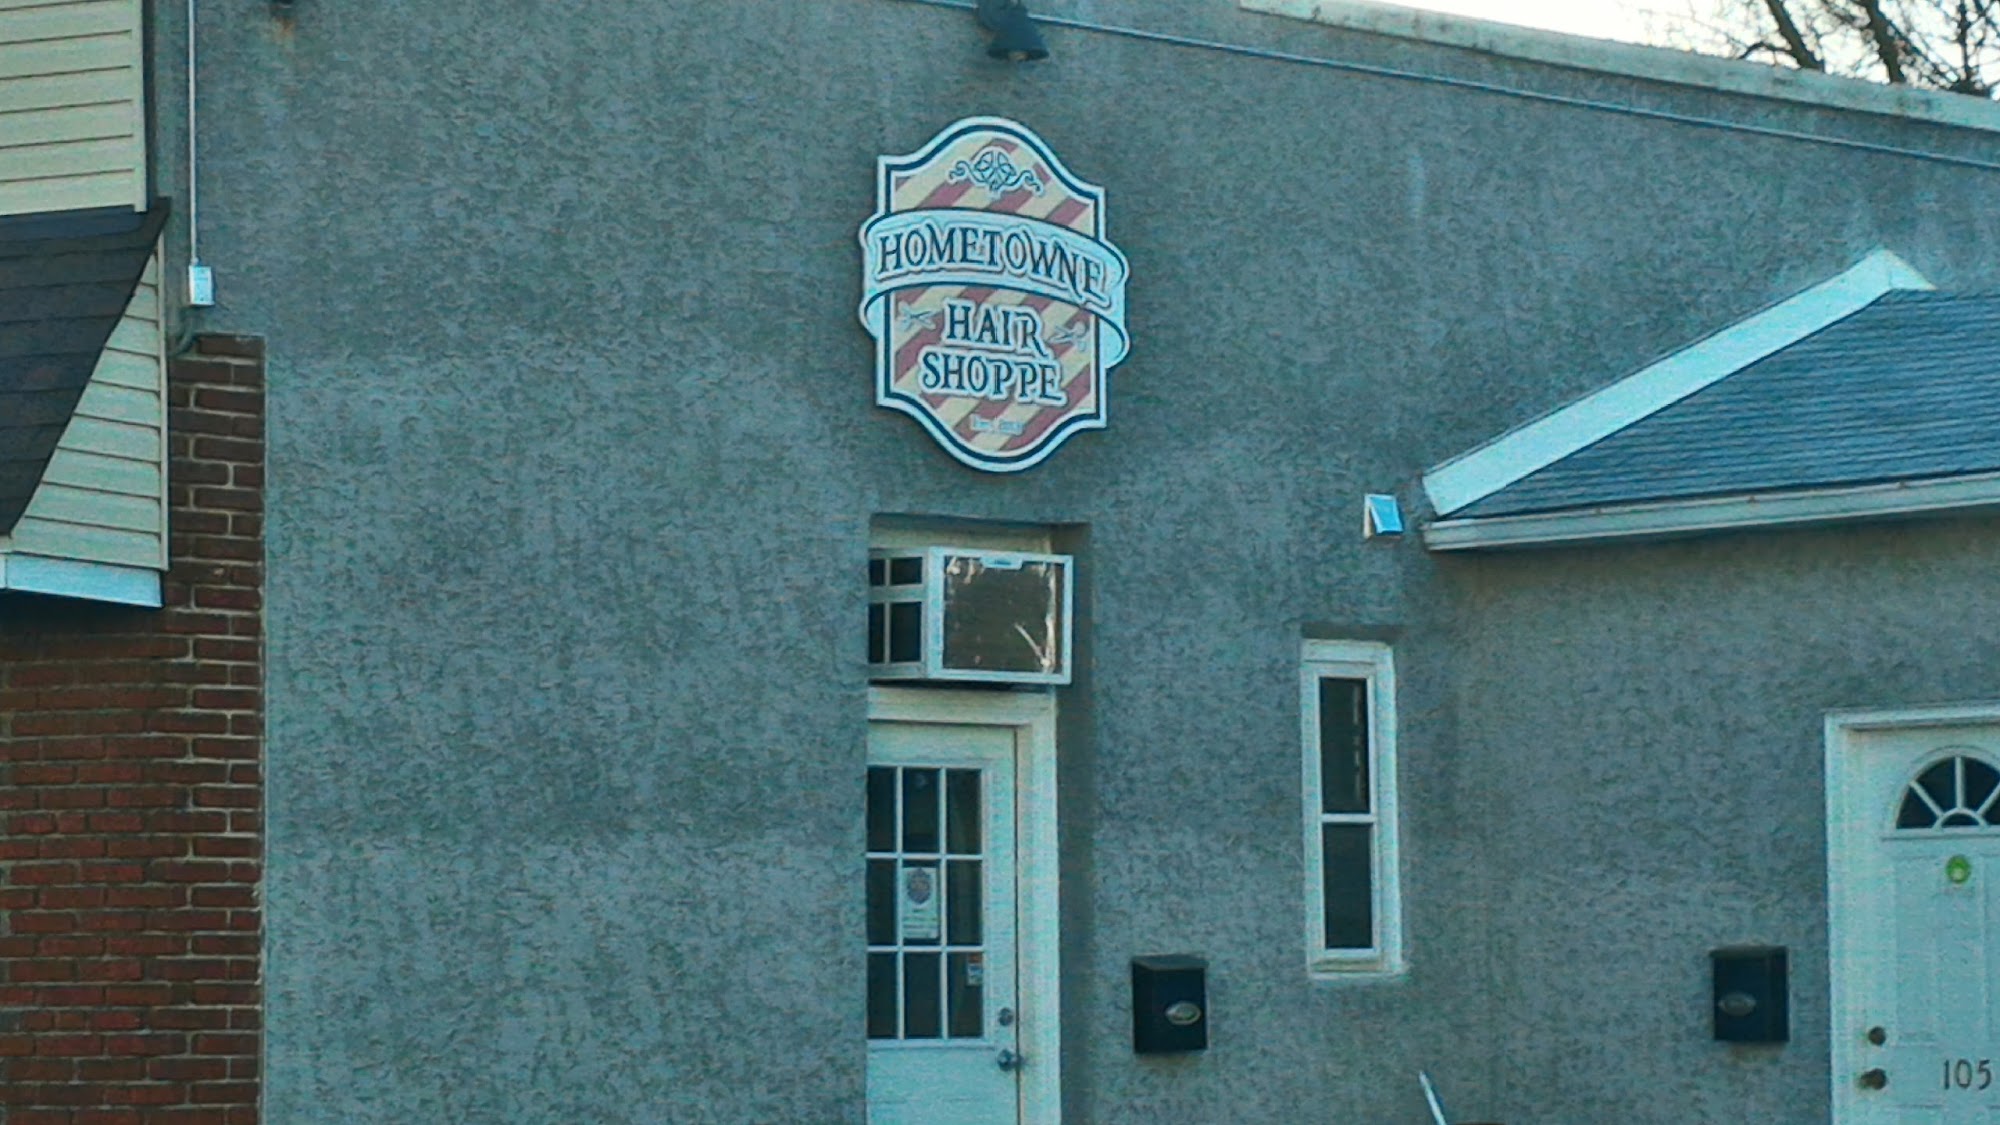 Hometowne Hair Shoppe 101 S Morton Ave, Rutledge Pennsylvania 19070